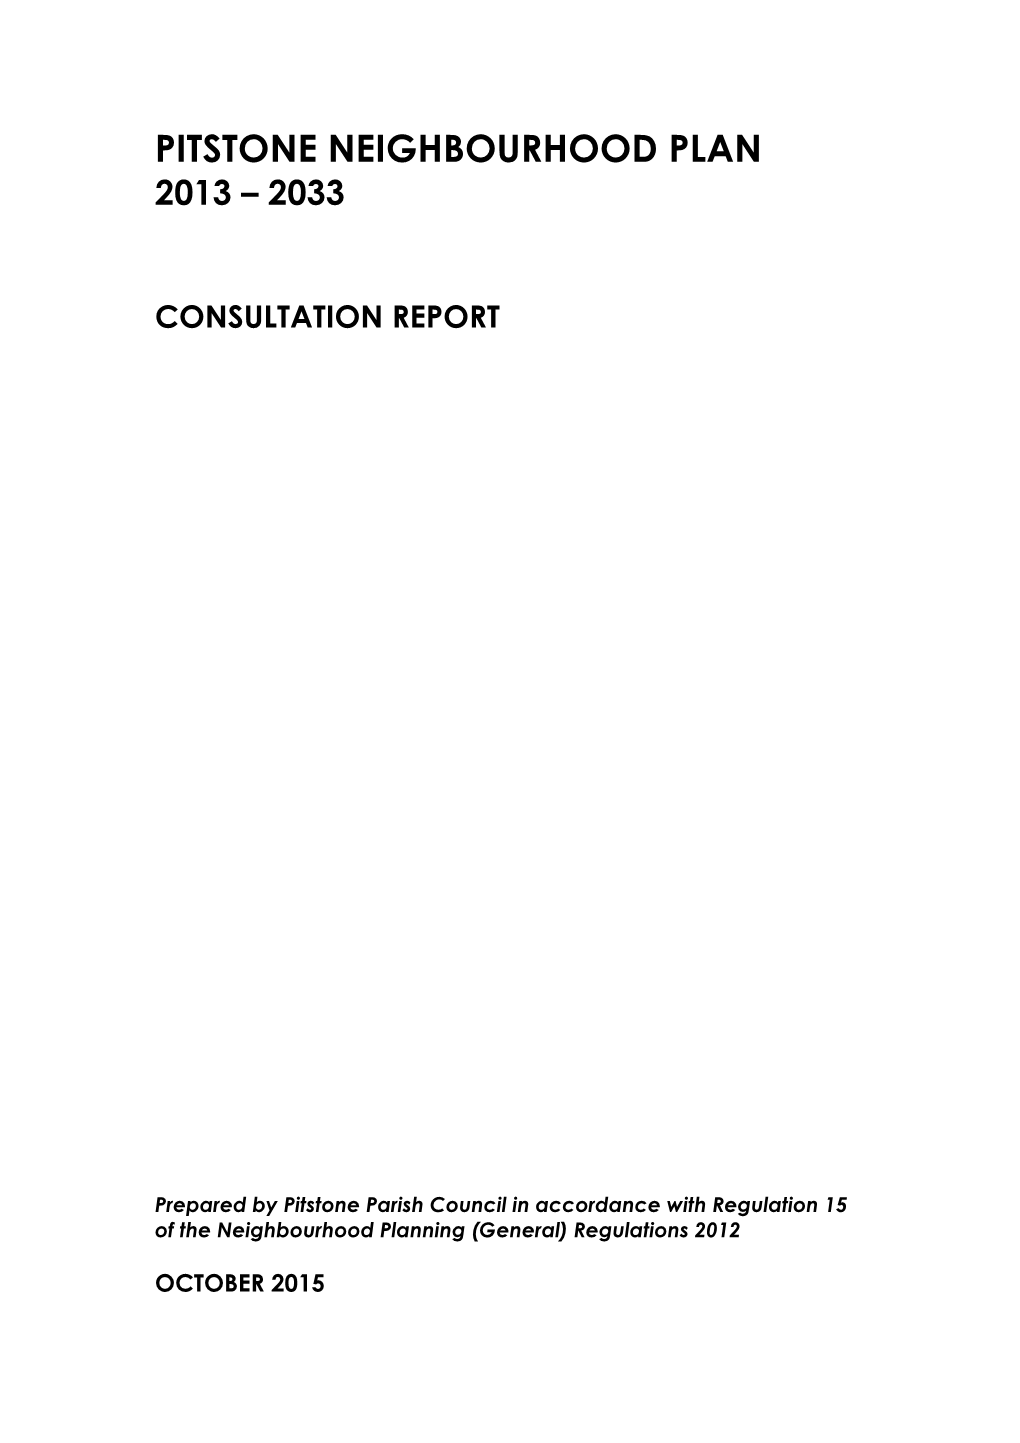 Pitstone Neighbourhood Plan Consultation Report